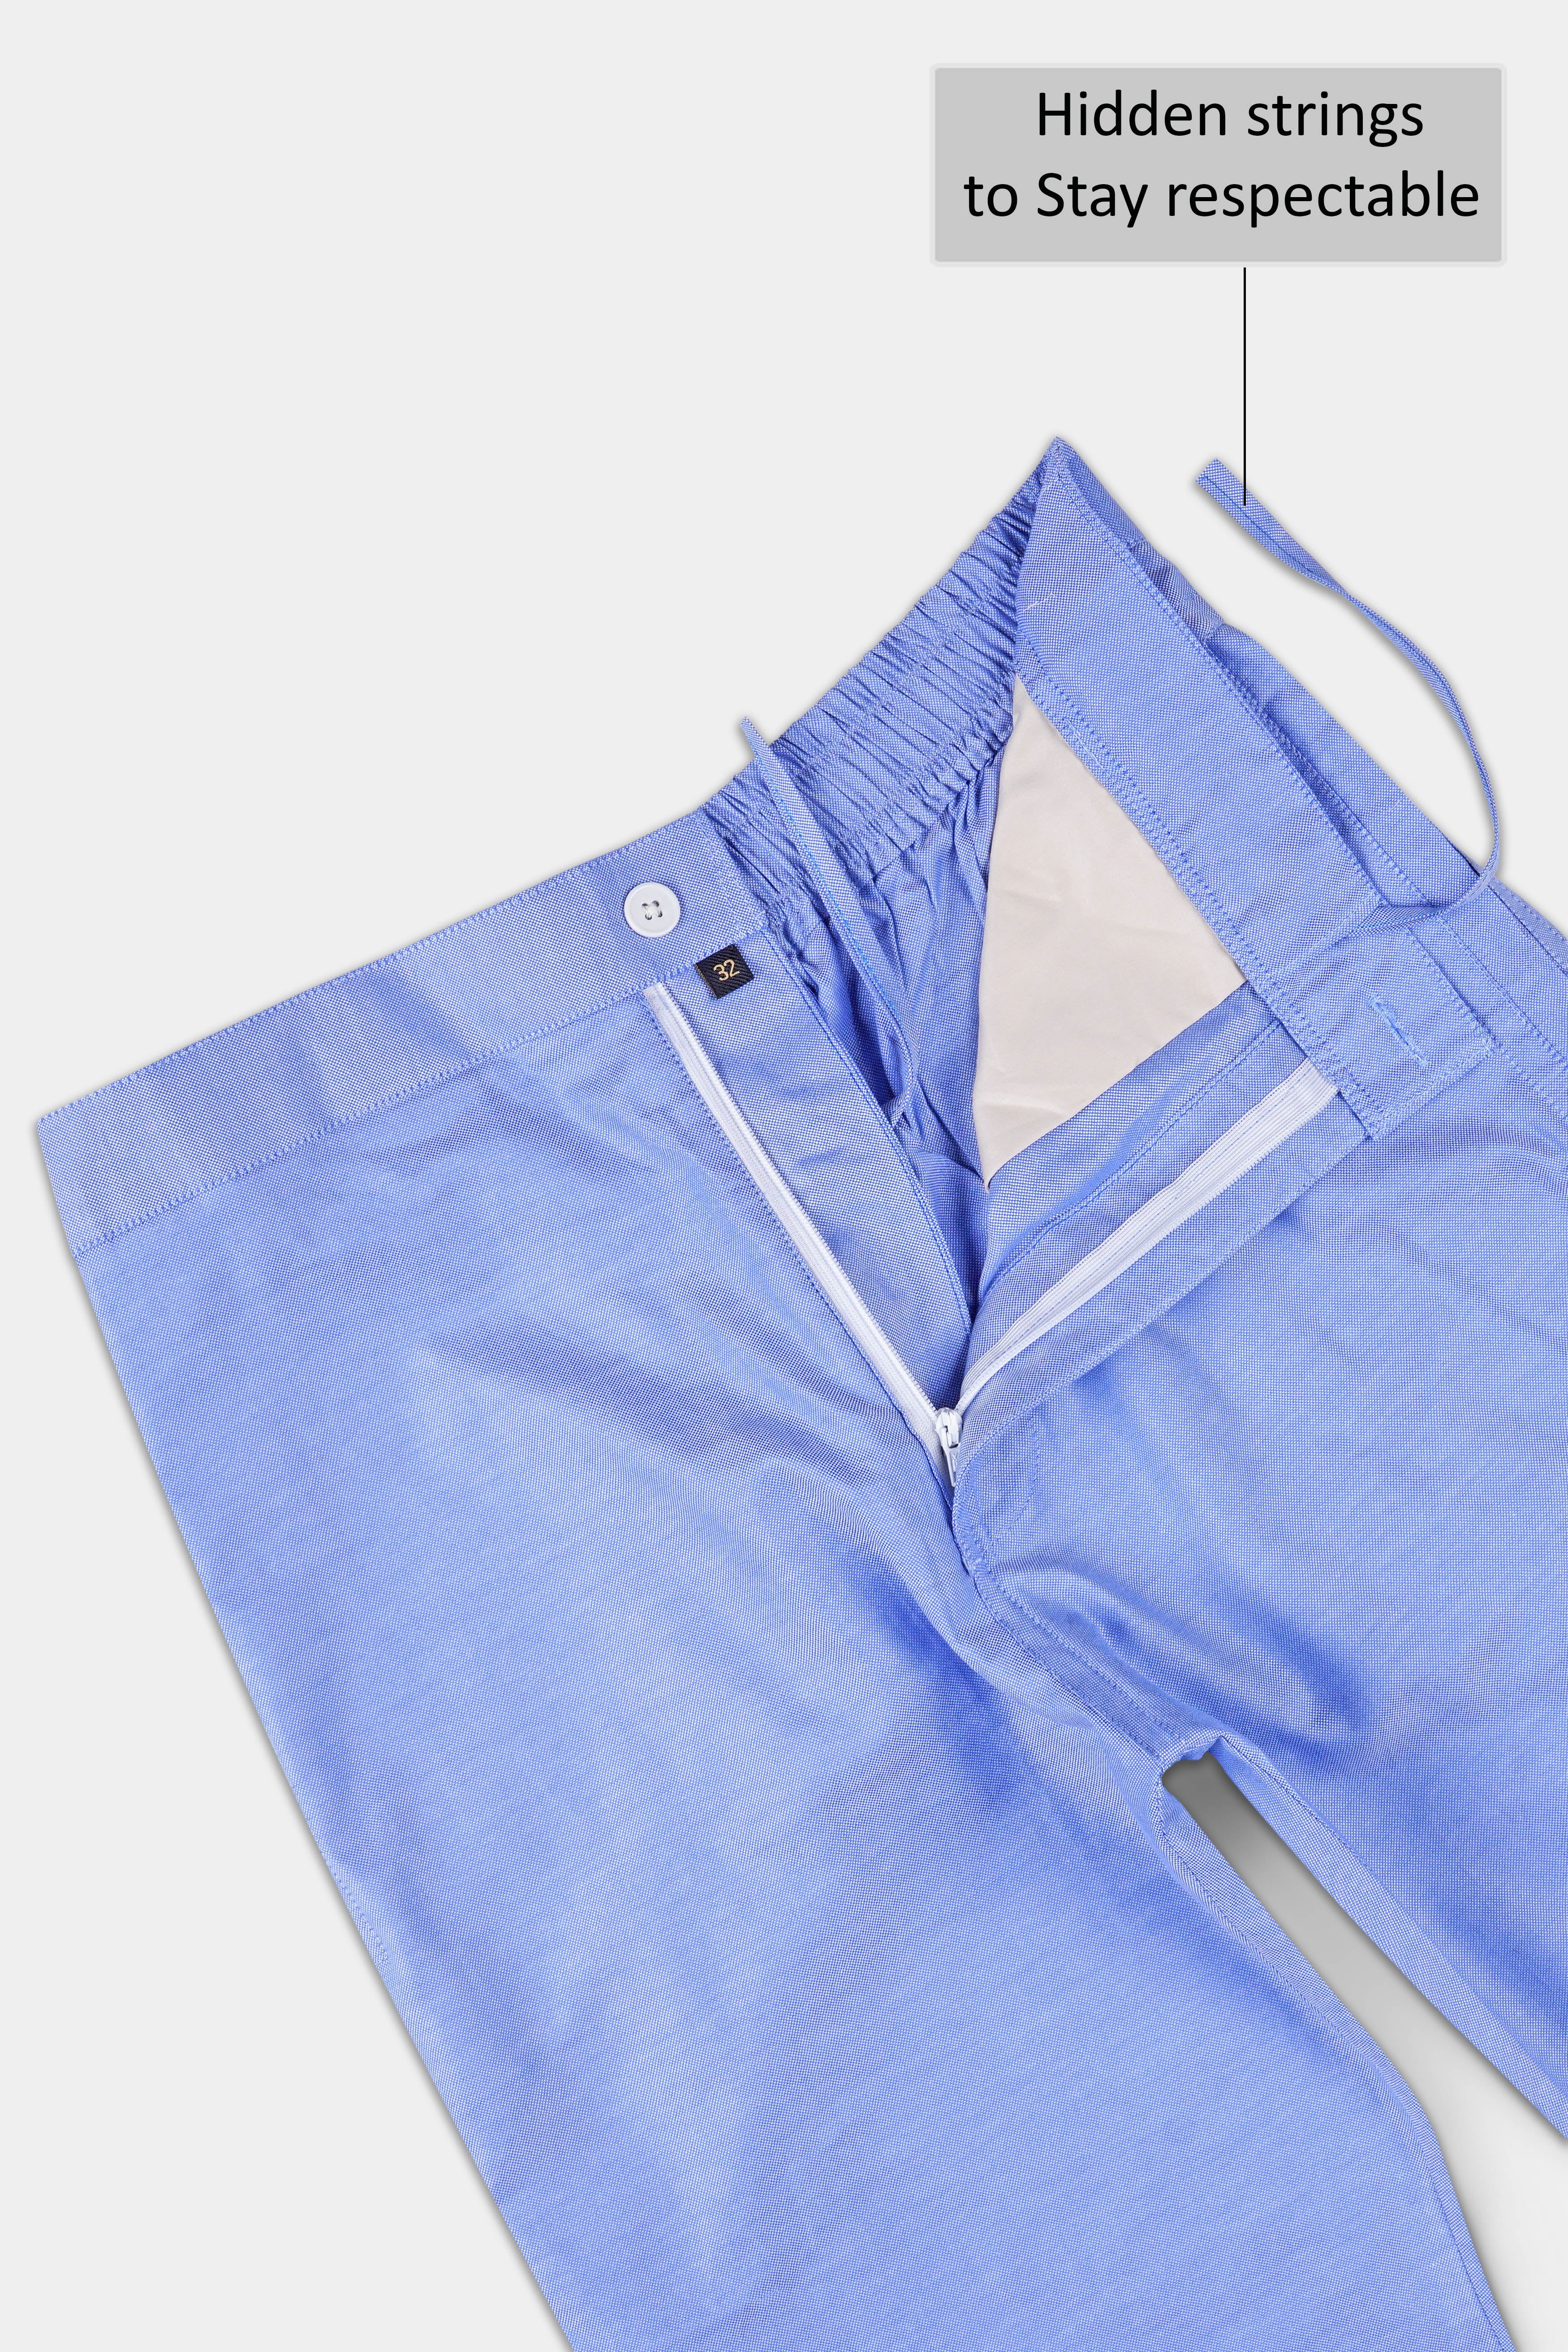 Perano Blue Super Soft Royal Oxford Cotton Lounge Pant